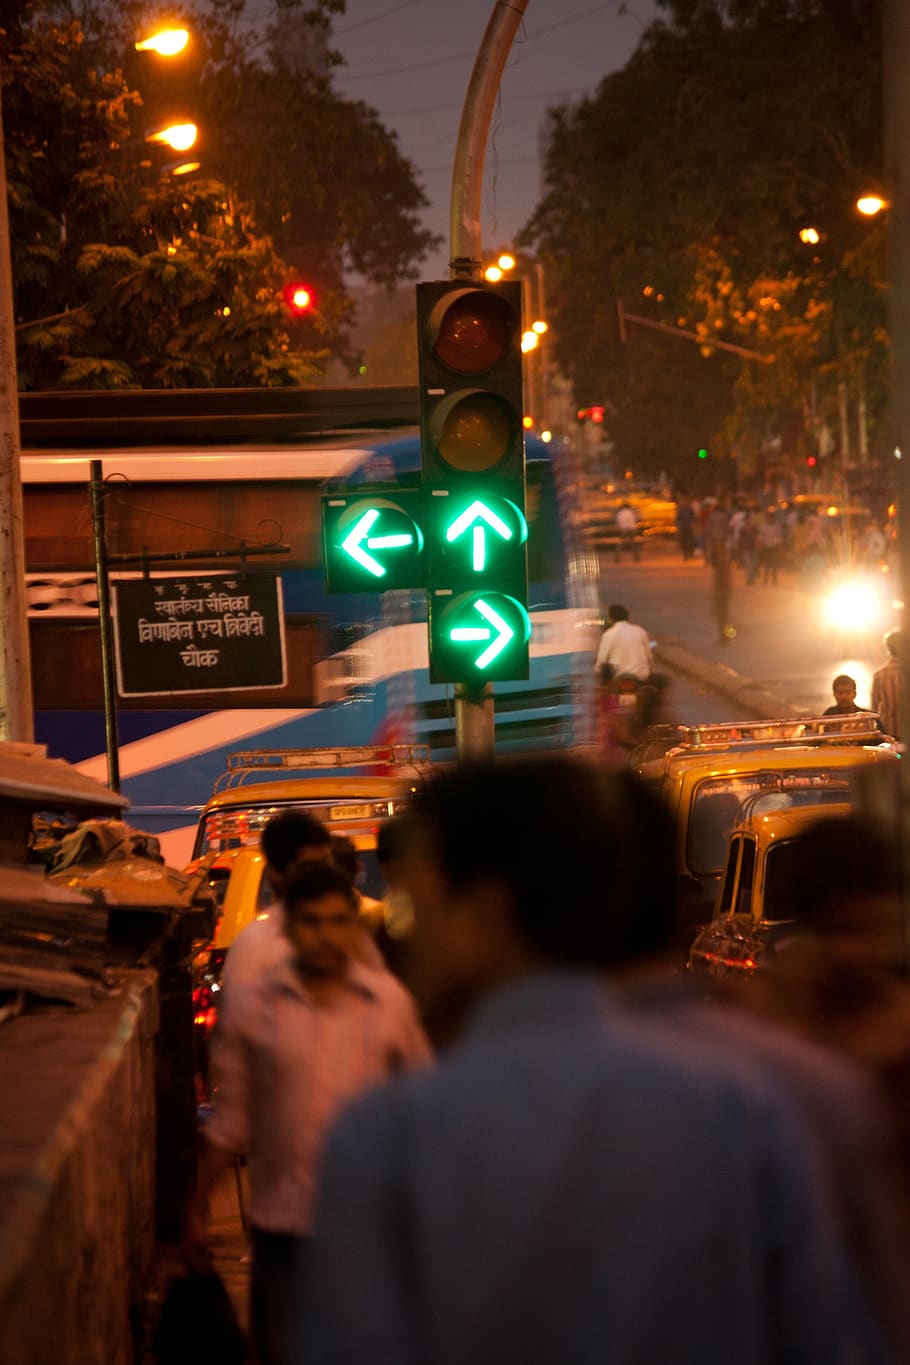 traffic lights, green, signal, walk, india, crowded, night, pedestrians, illuminated, city